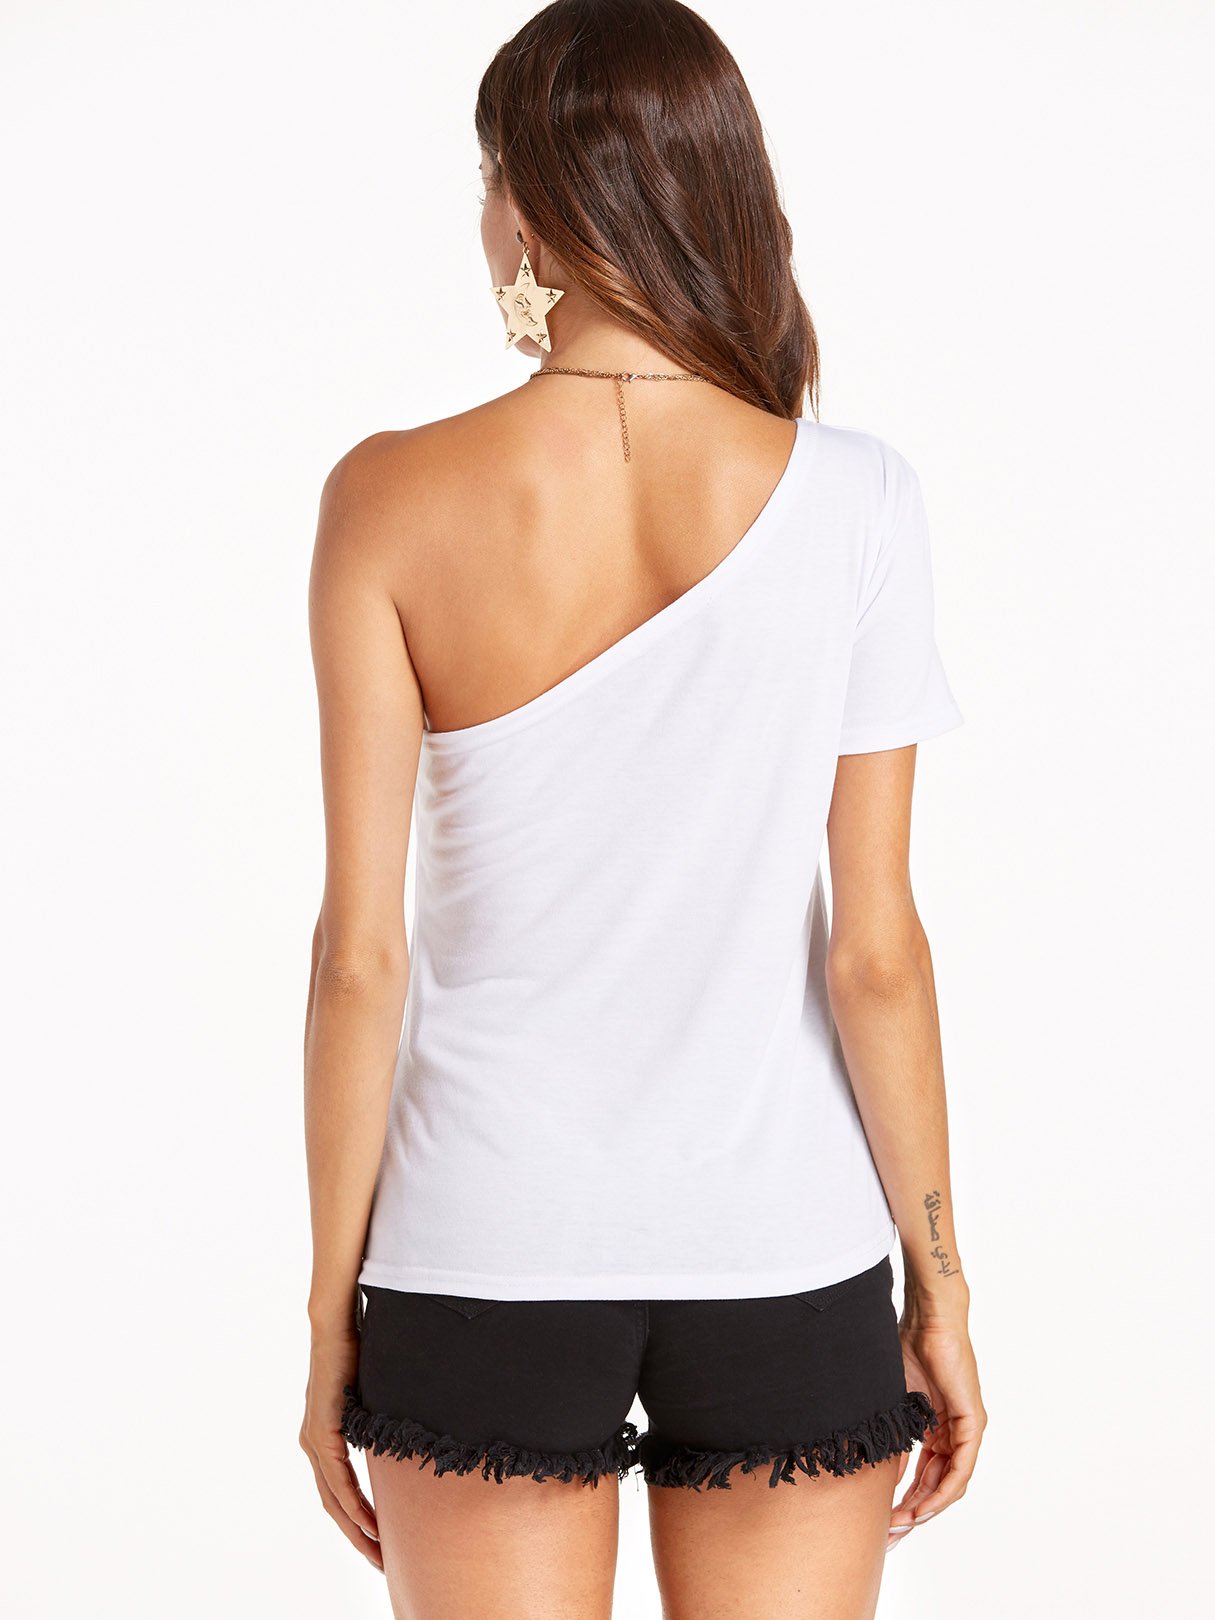 NEW FEELING Womens White T-Shirts